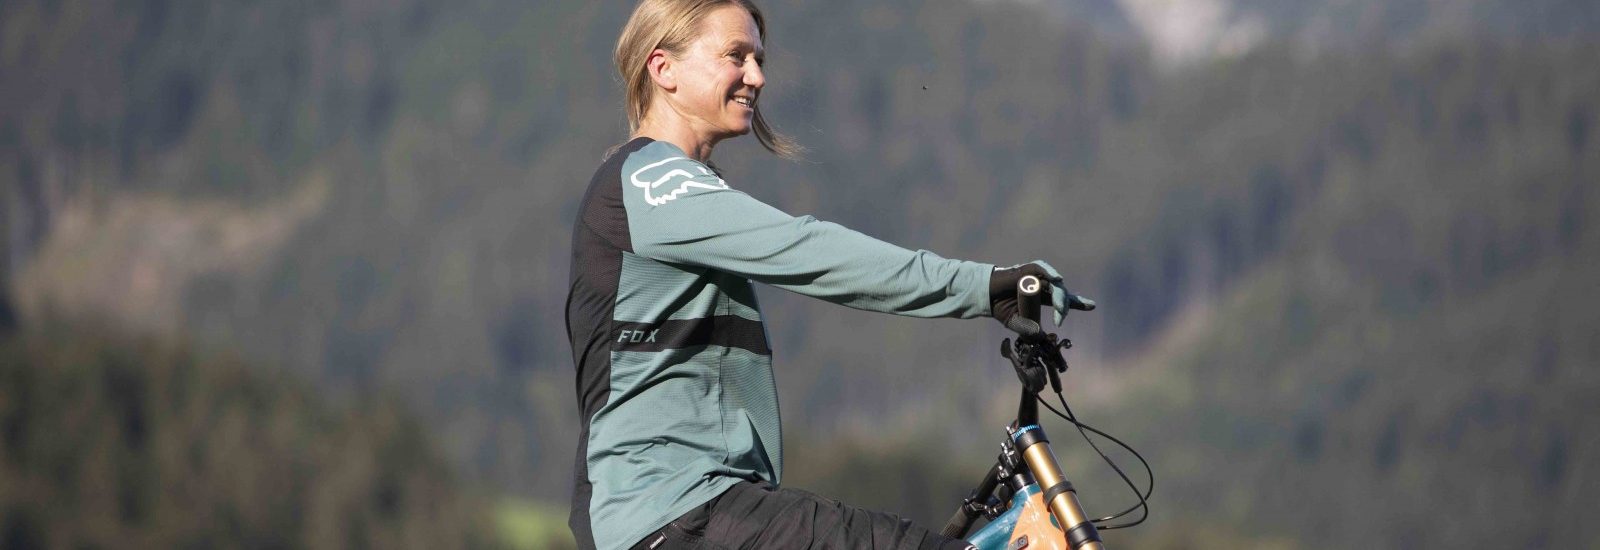 Sabine Enzinger, Eigentümerin der Element Bike School in Saalfelden Leogang im Bike Park Leogang